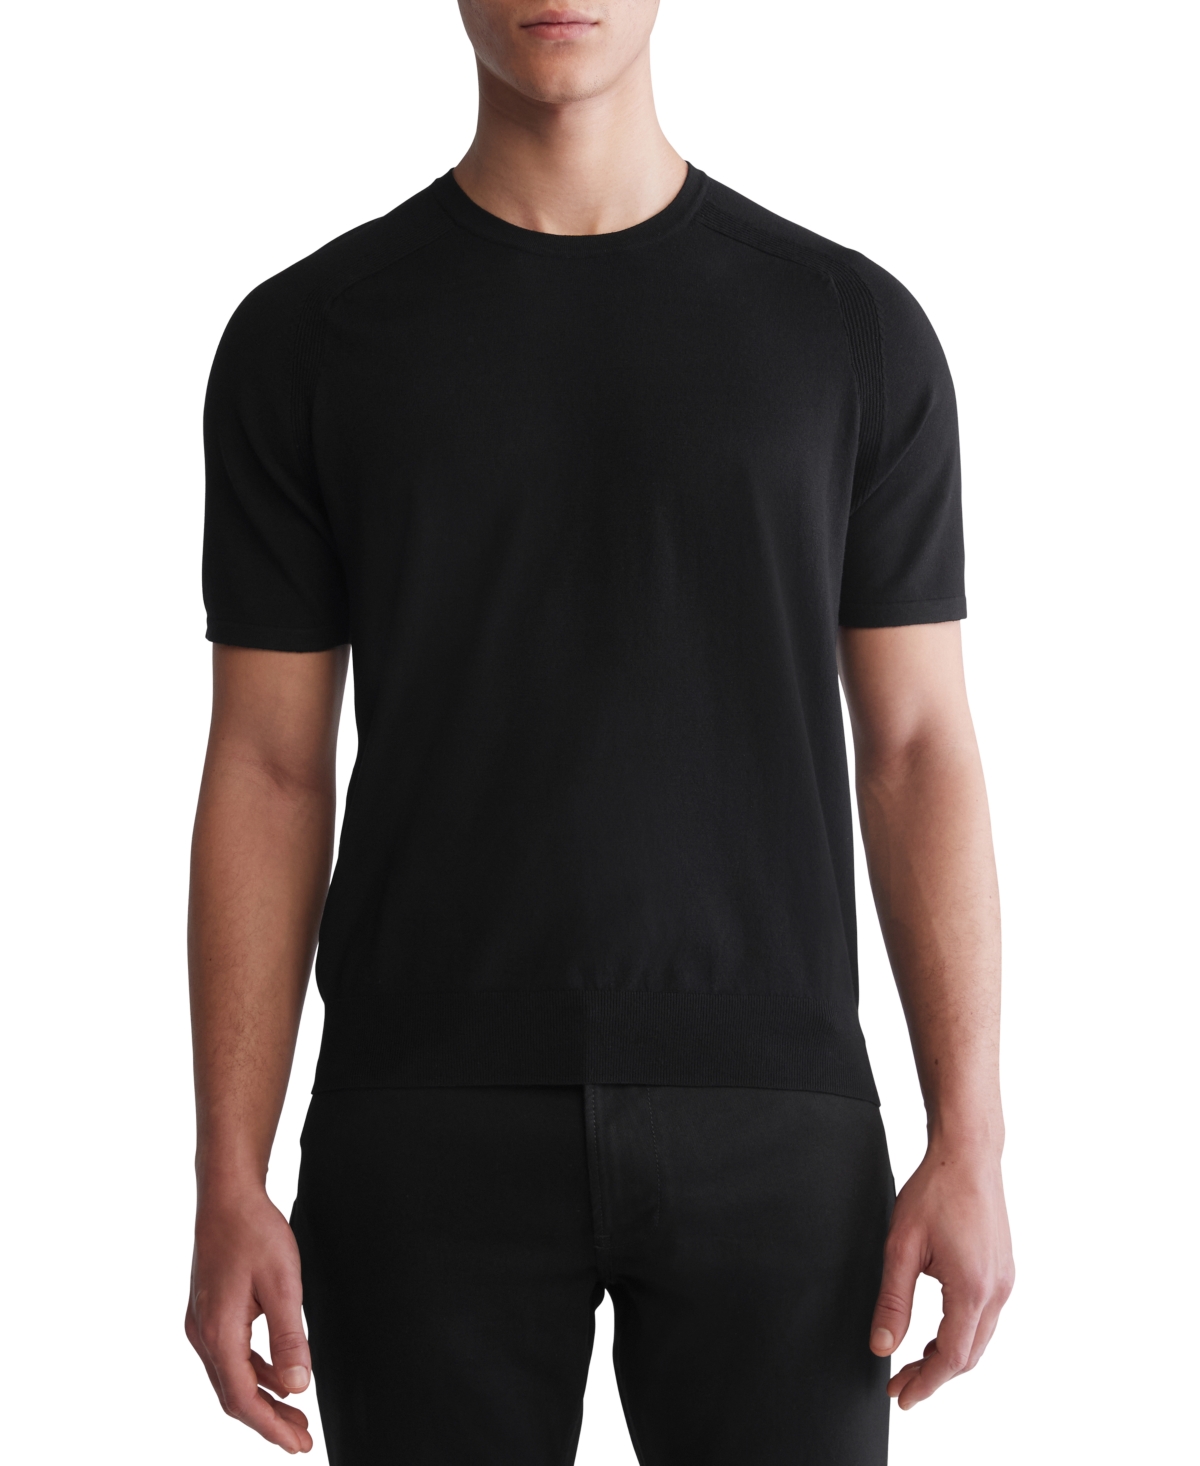 Men's Short Sleeve Crewneck Knit Tech T-Shirt - Black